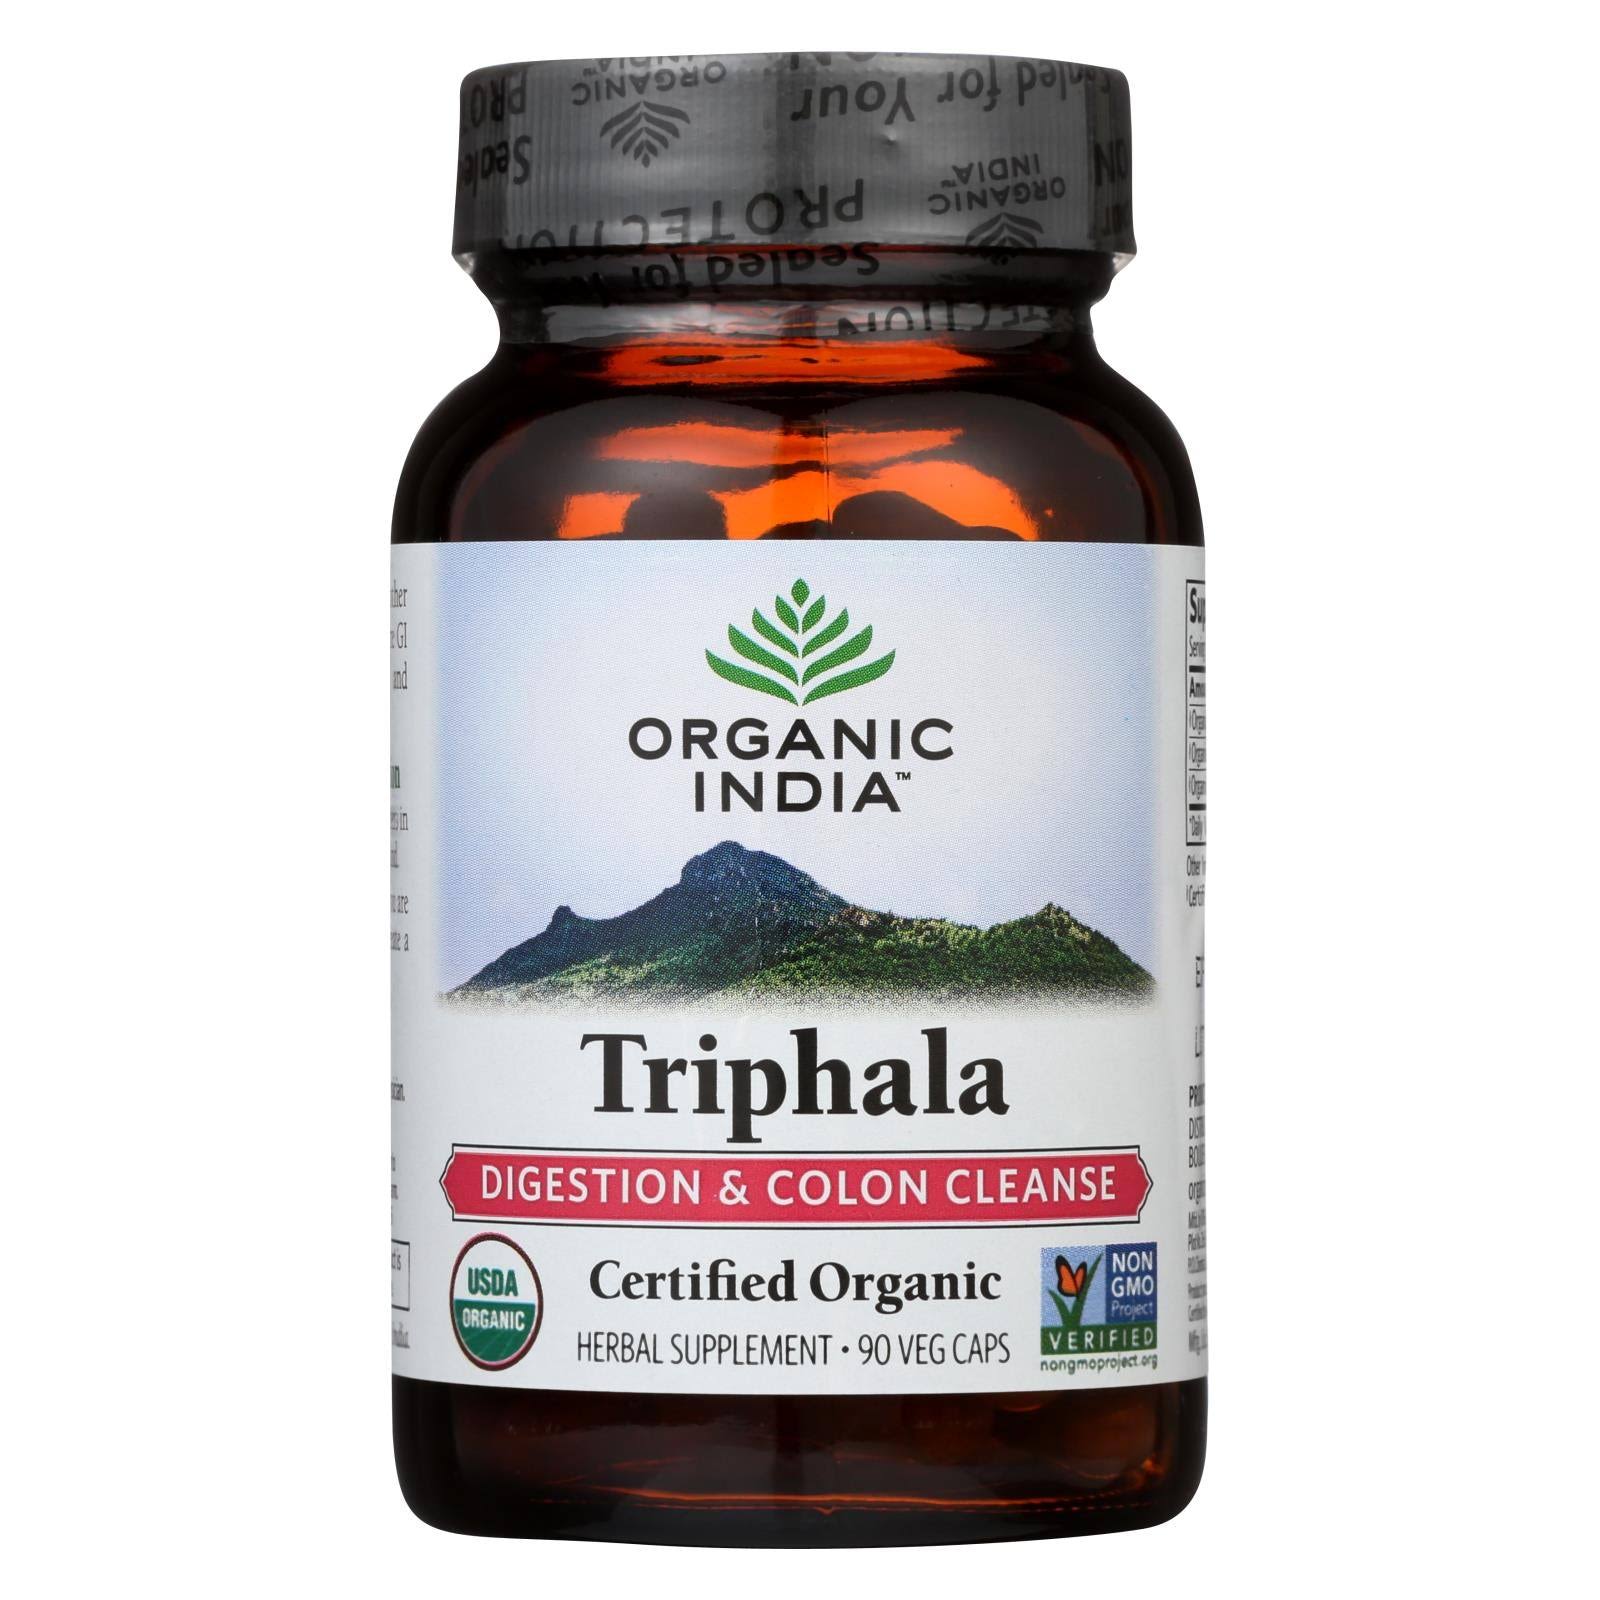 Organic India Triphala Digestion & Colon Cleanse